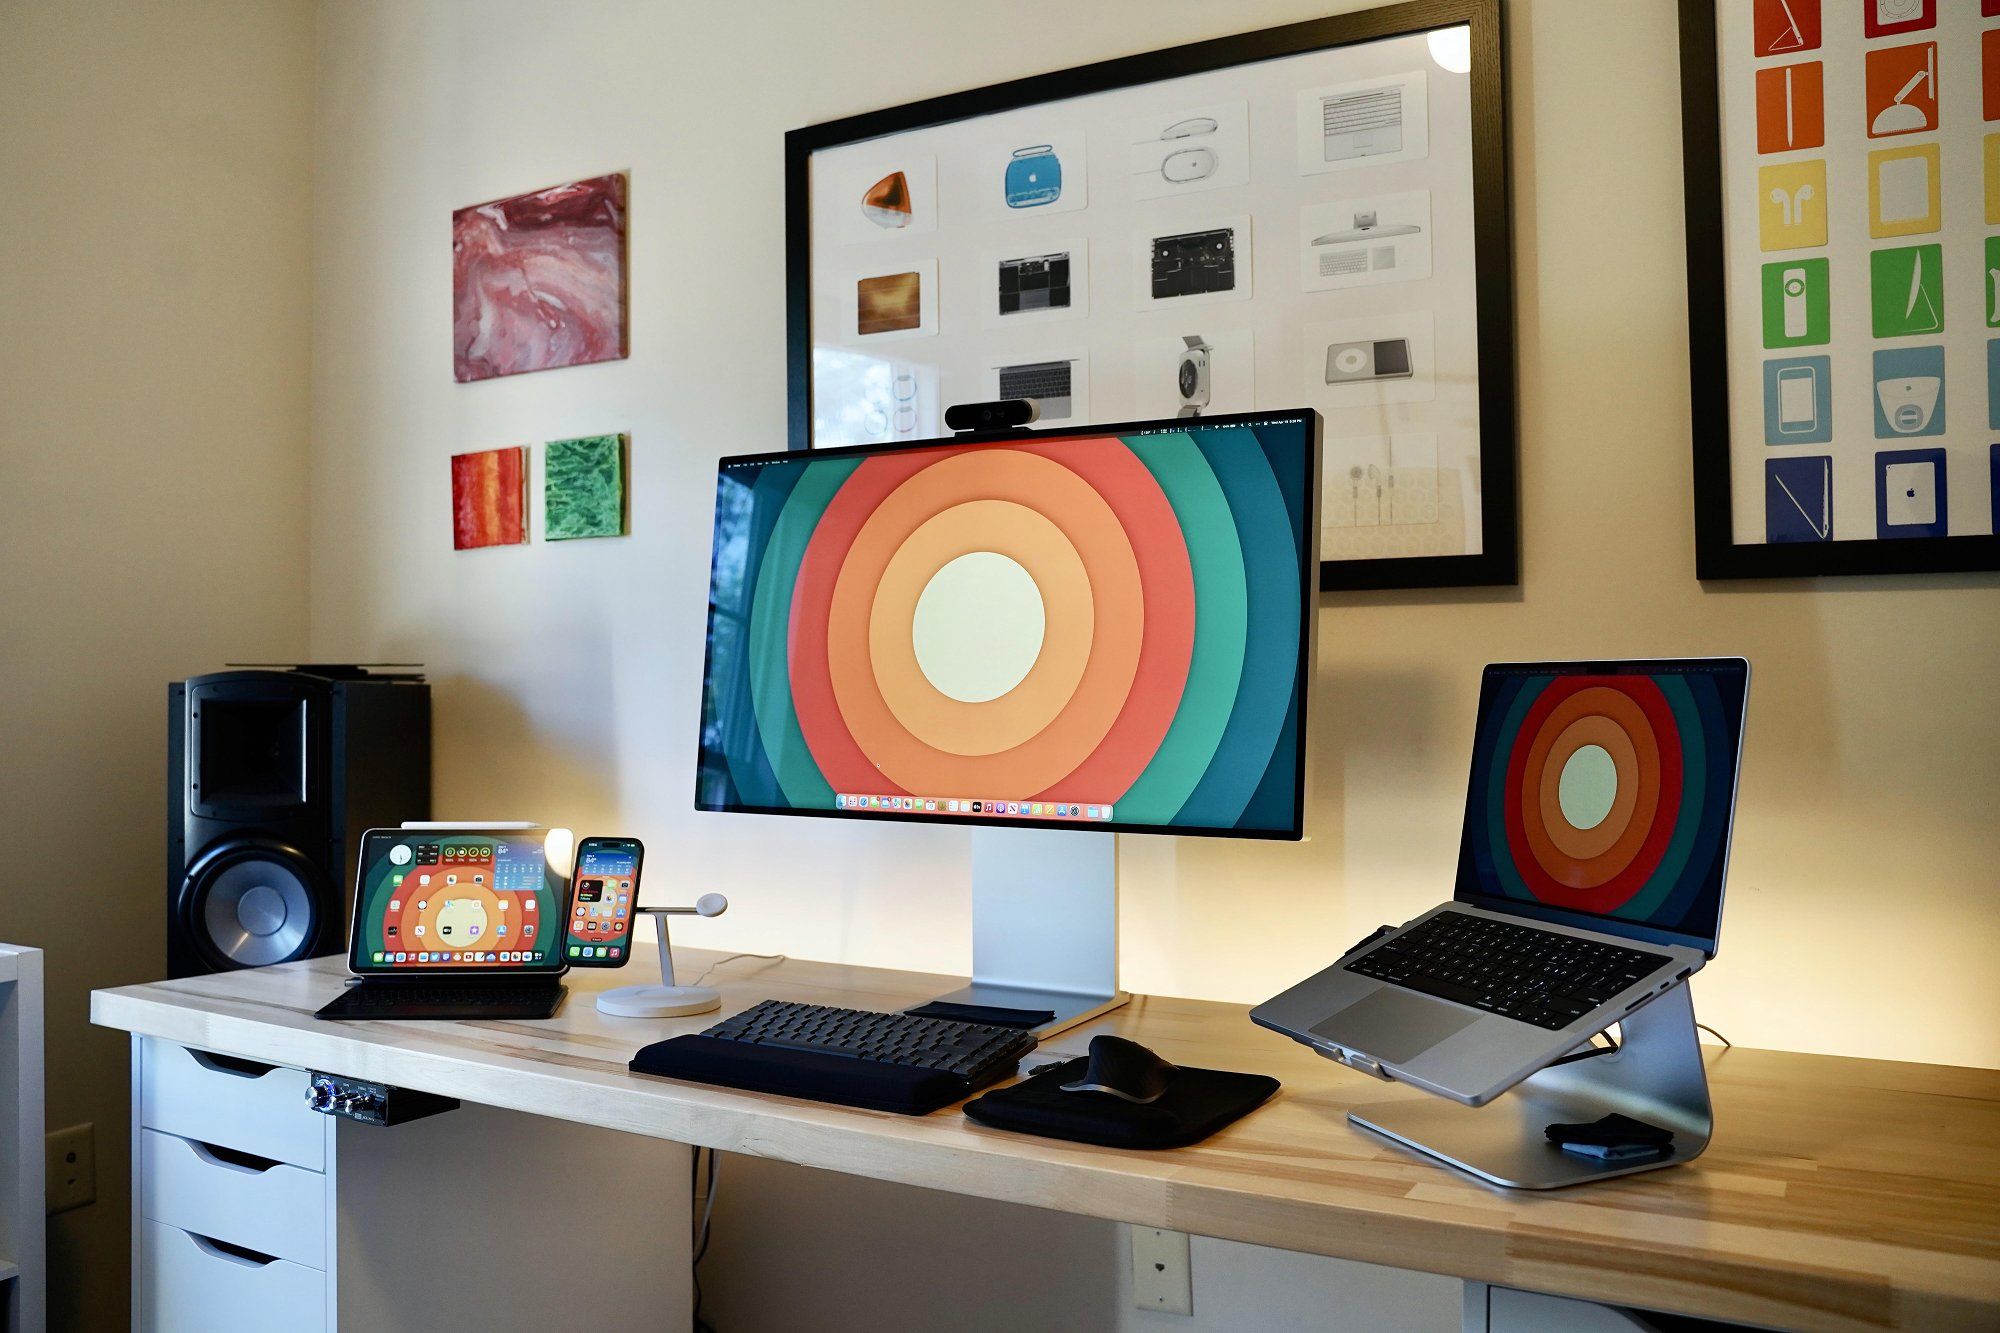 A simple and well-organised Apple desk setup